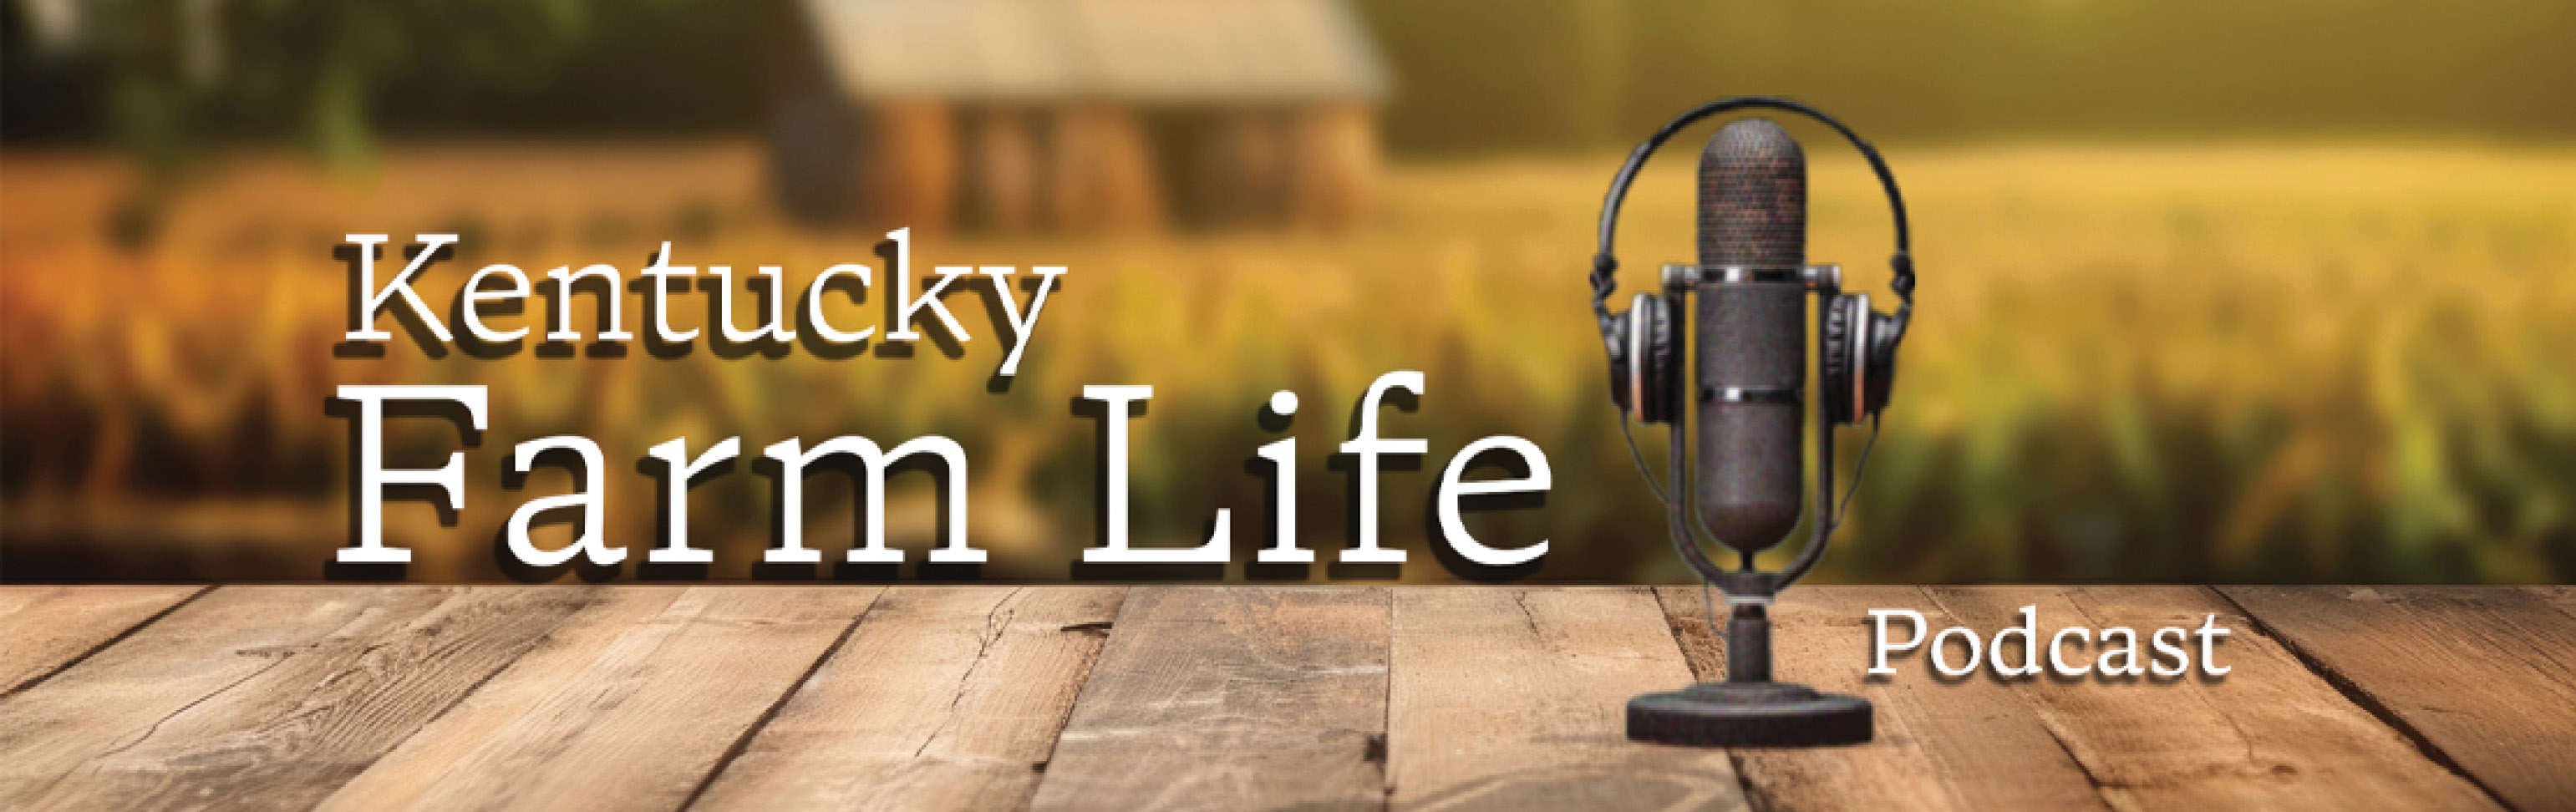 Kentucky Farm Life Podcast Header